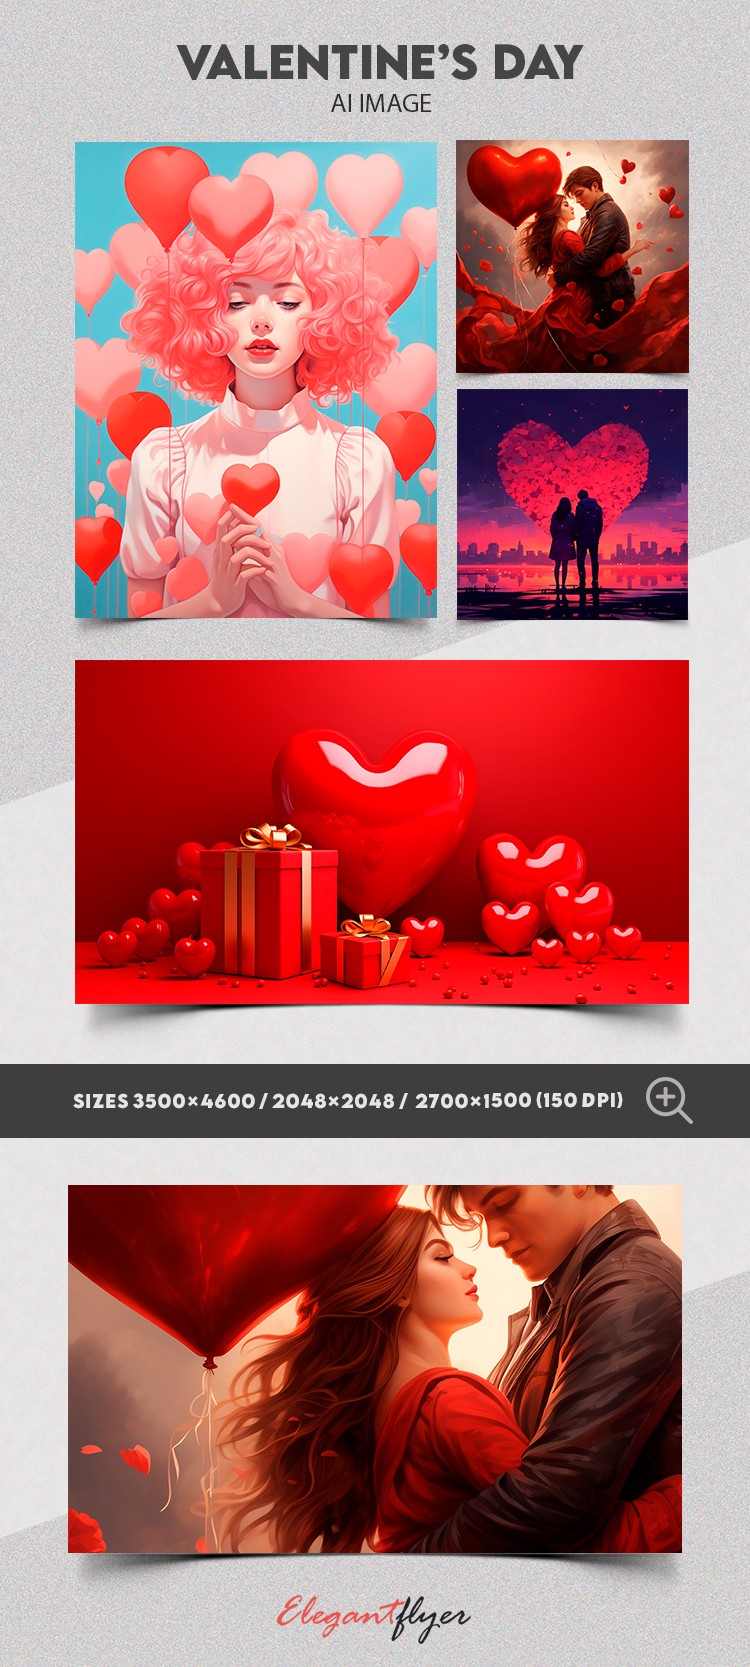 Valentine's Day Set with Hearts by ElegantFlyer